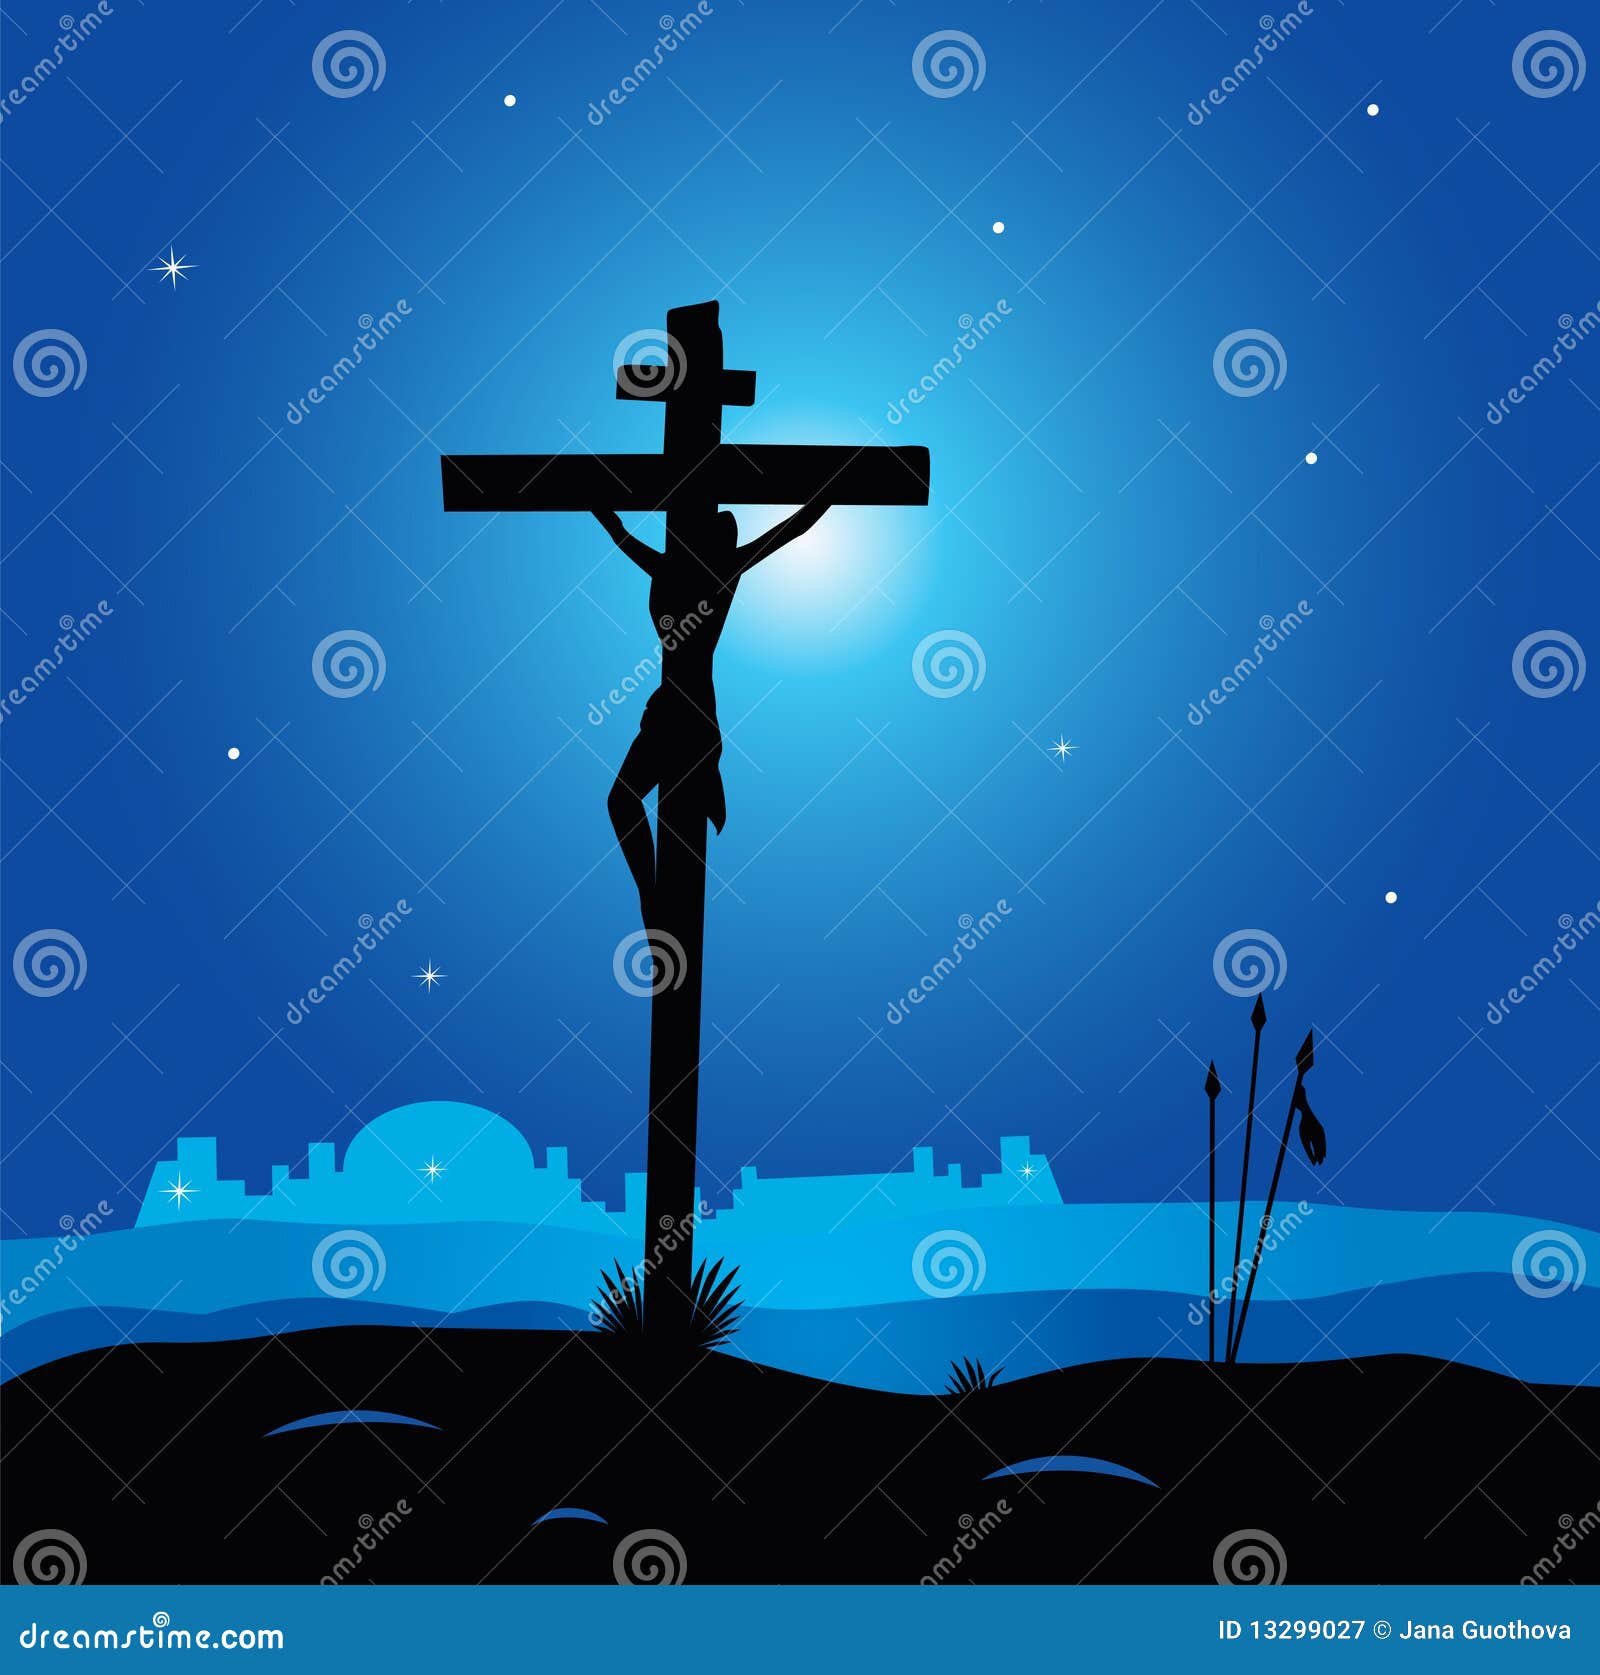 calvary - crucifixion scene with jesus christ on c